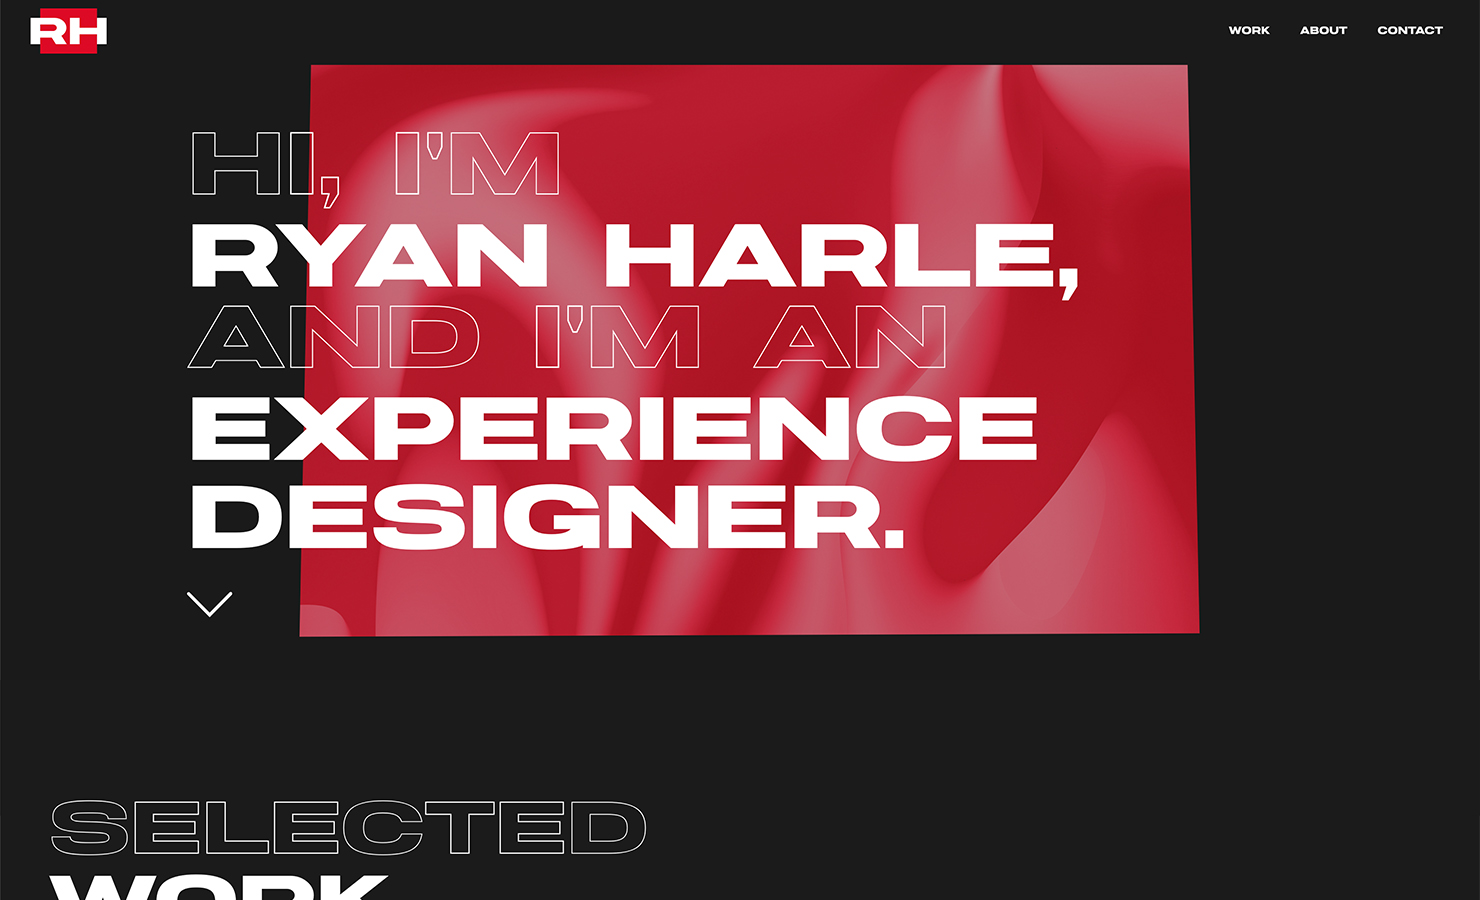 Ryan Harle Experience Design